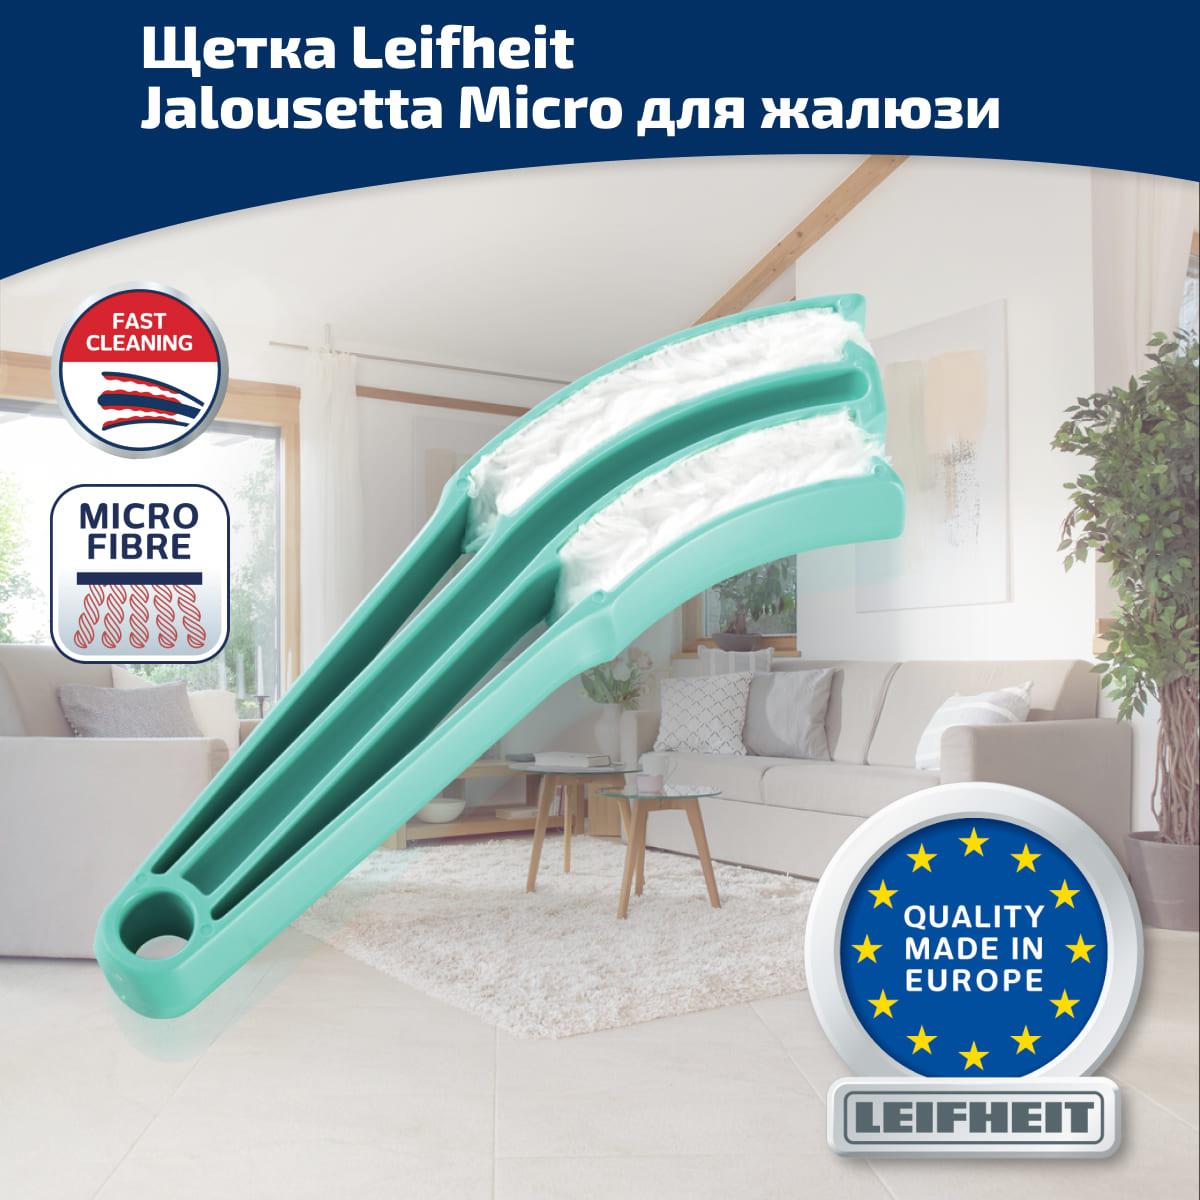 Щетка Leifheit Jalousetta Micro для чистки жалюзи палочка для чистки ушей с подсветкой ааа 14 х 1 2 см